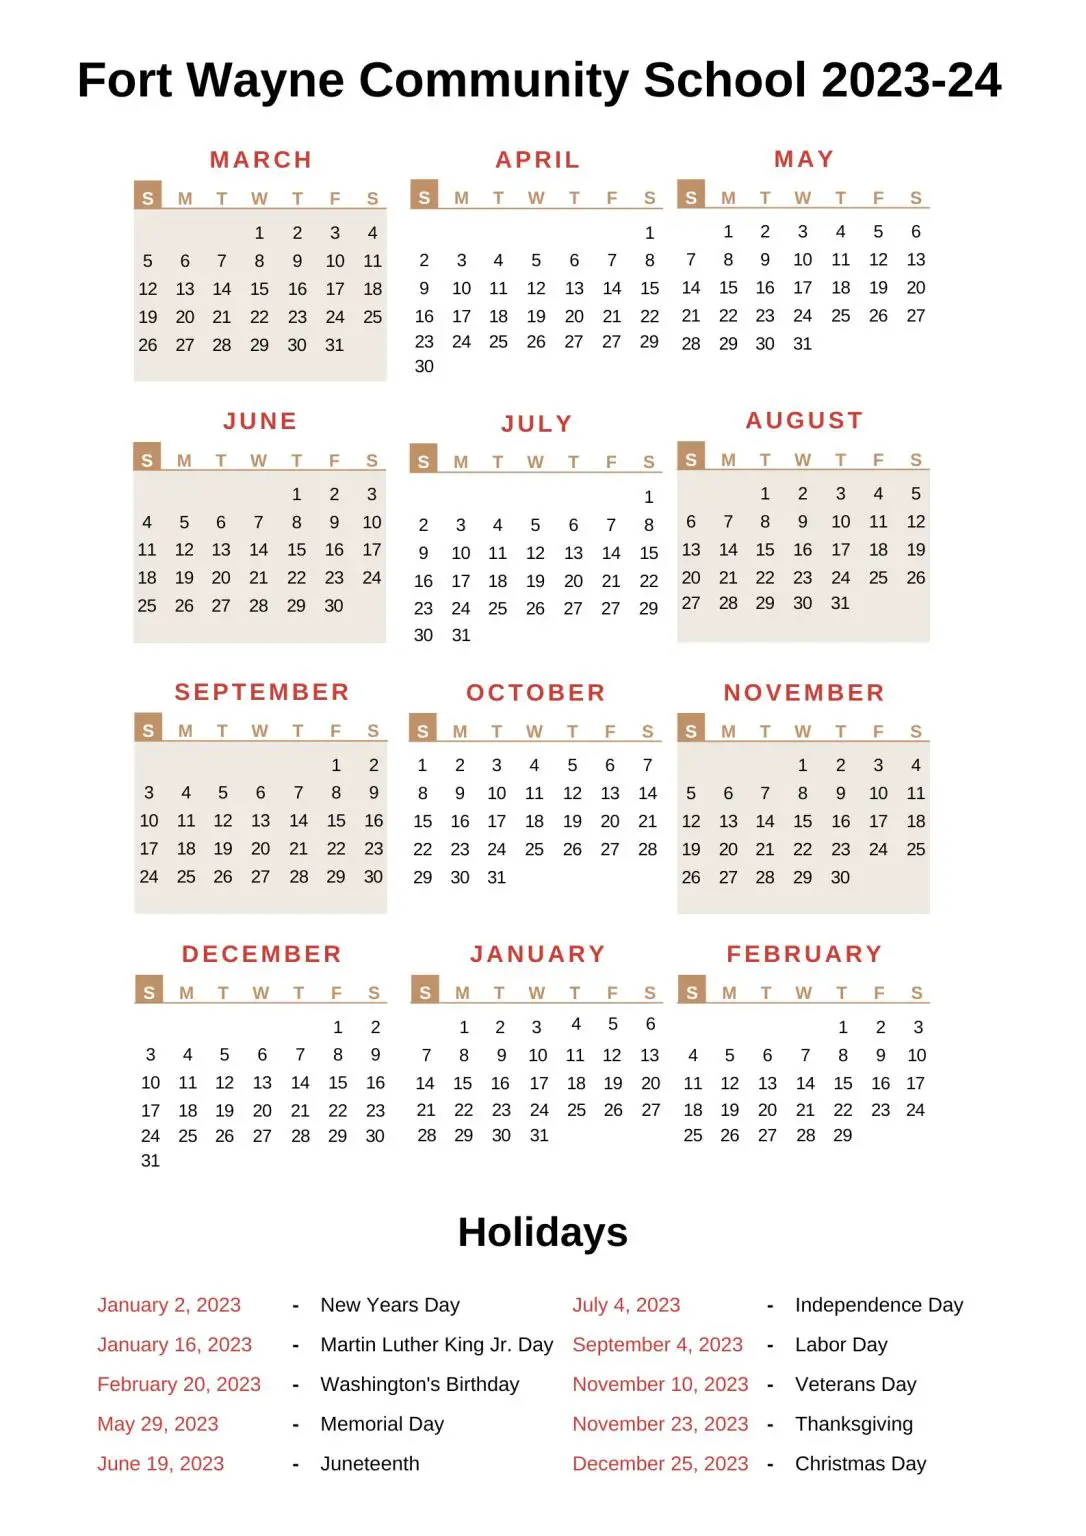 Fort Wayne Community Schools Calendar 2023 24 With Holidays